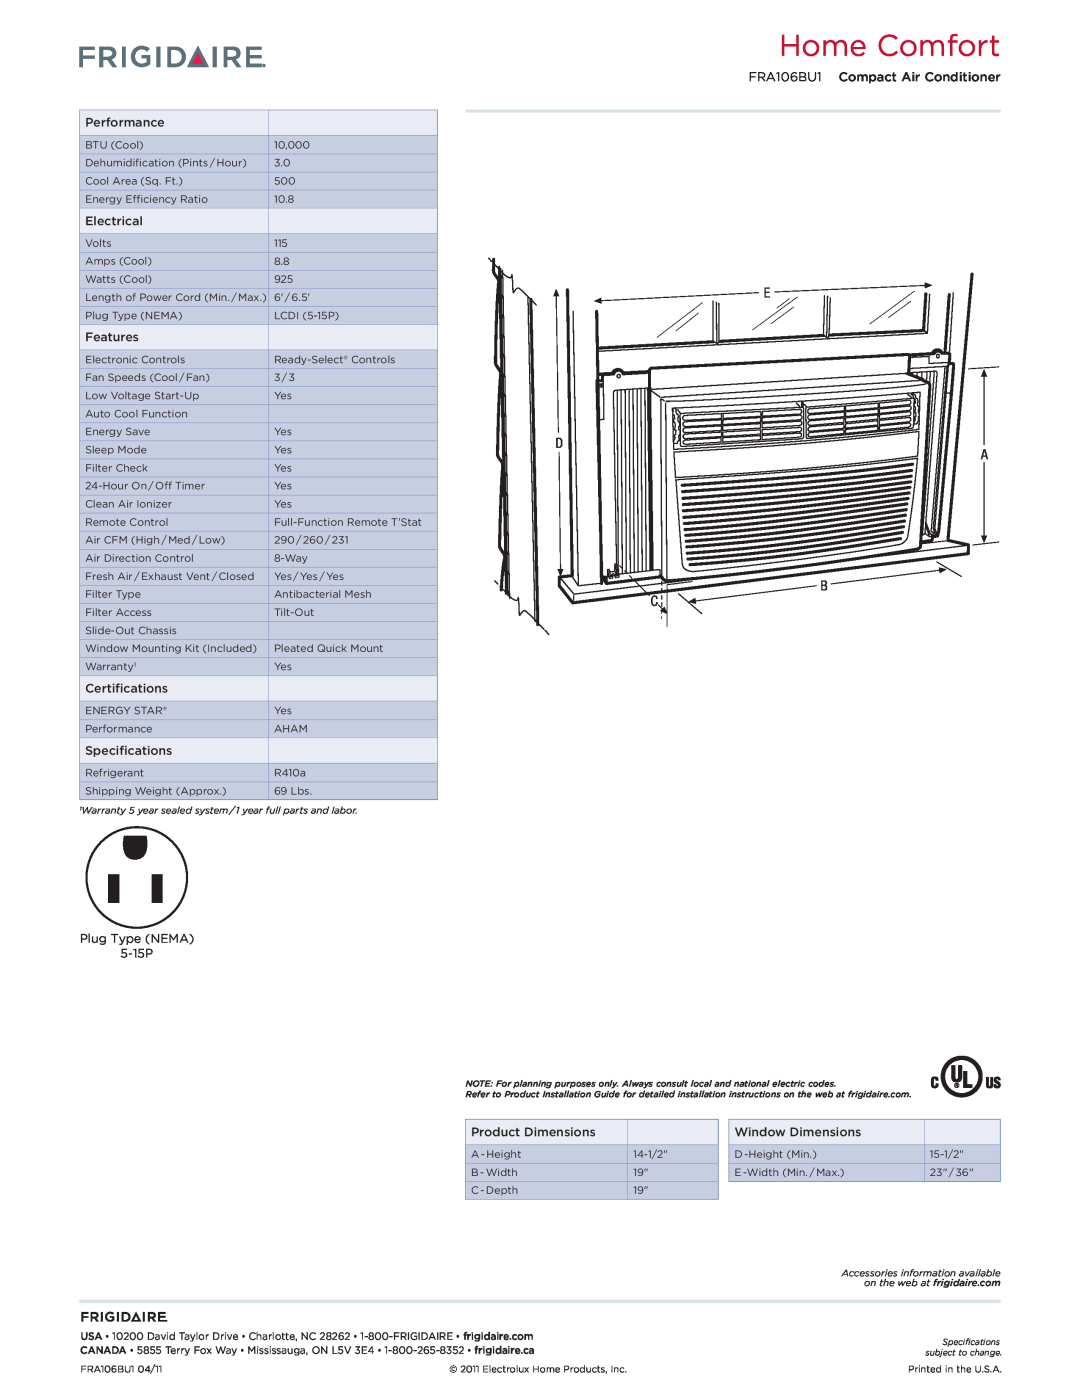 Frigidaire dimensions Home Comfort, E D A B C, FRA106BU1 Compact Air Conditioner 